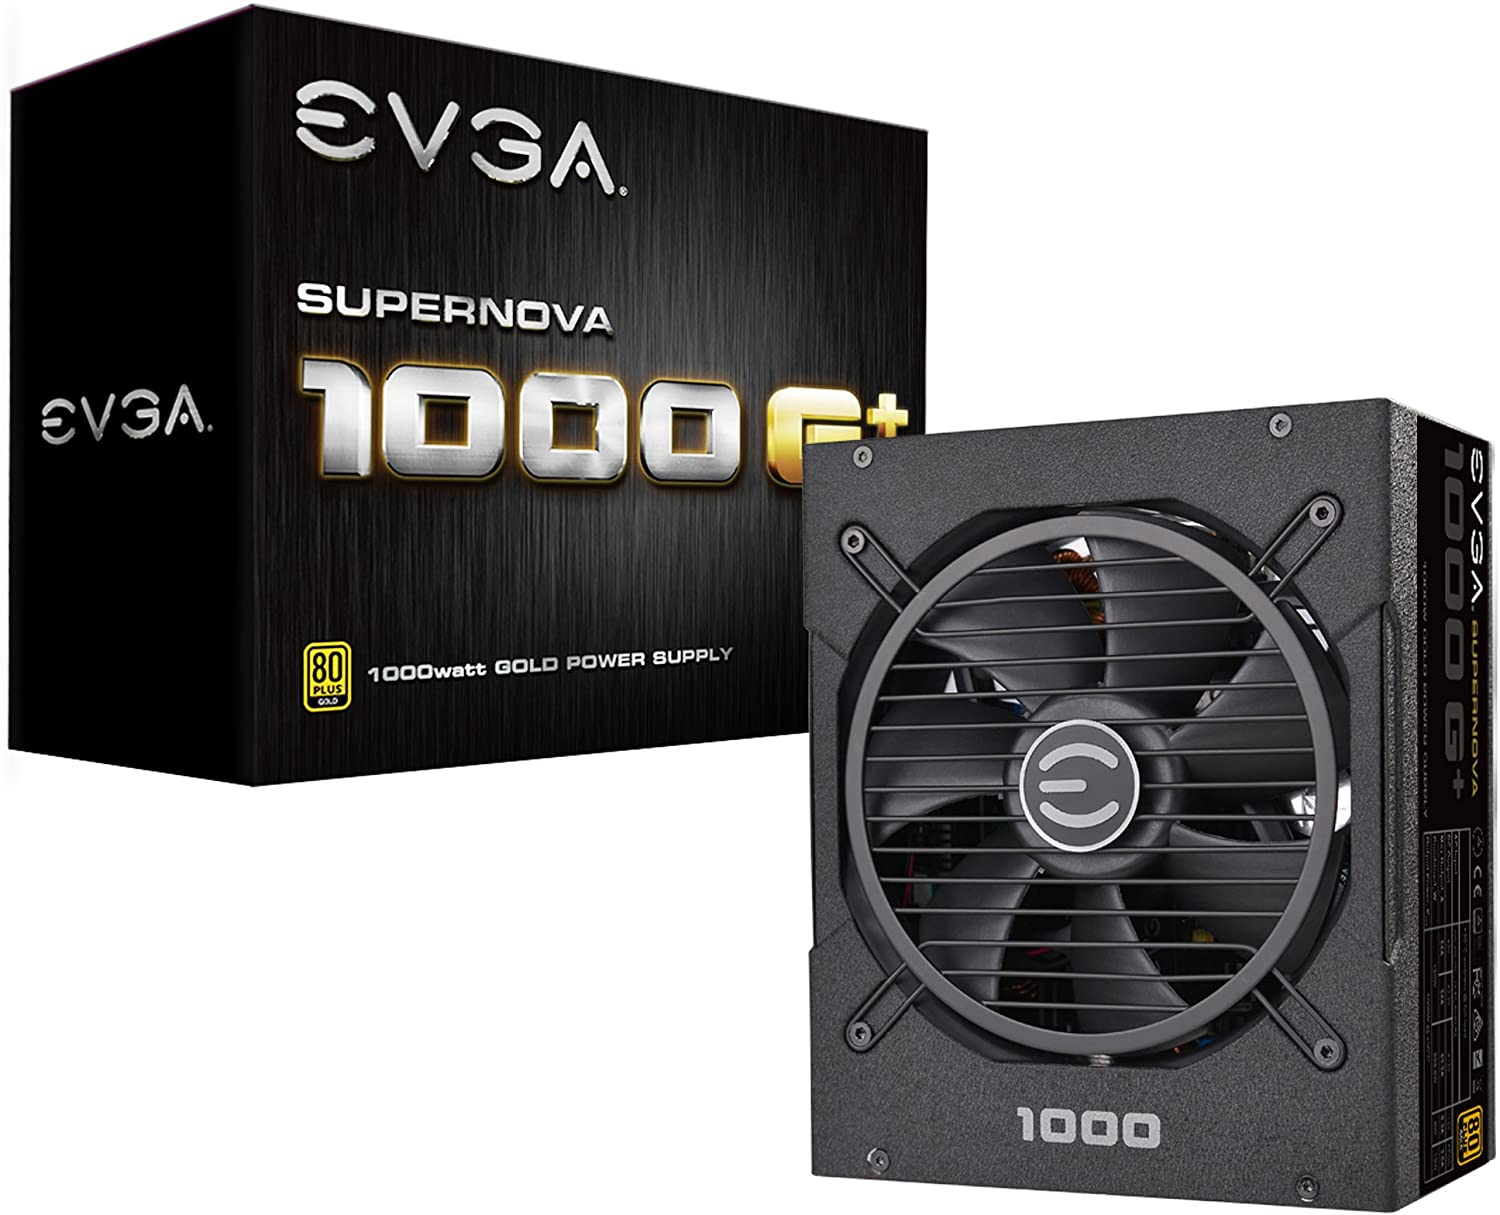 EVGA Super NOVA 1000 G+ PSU for GTX 1080